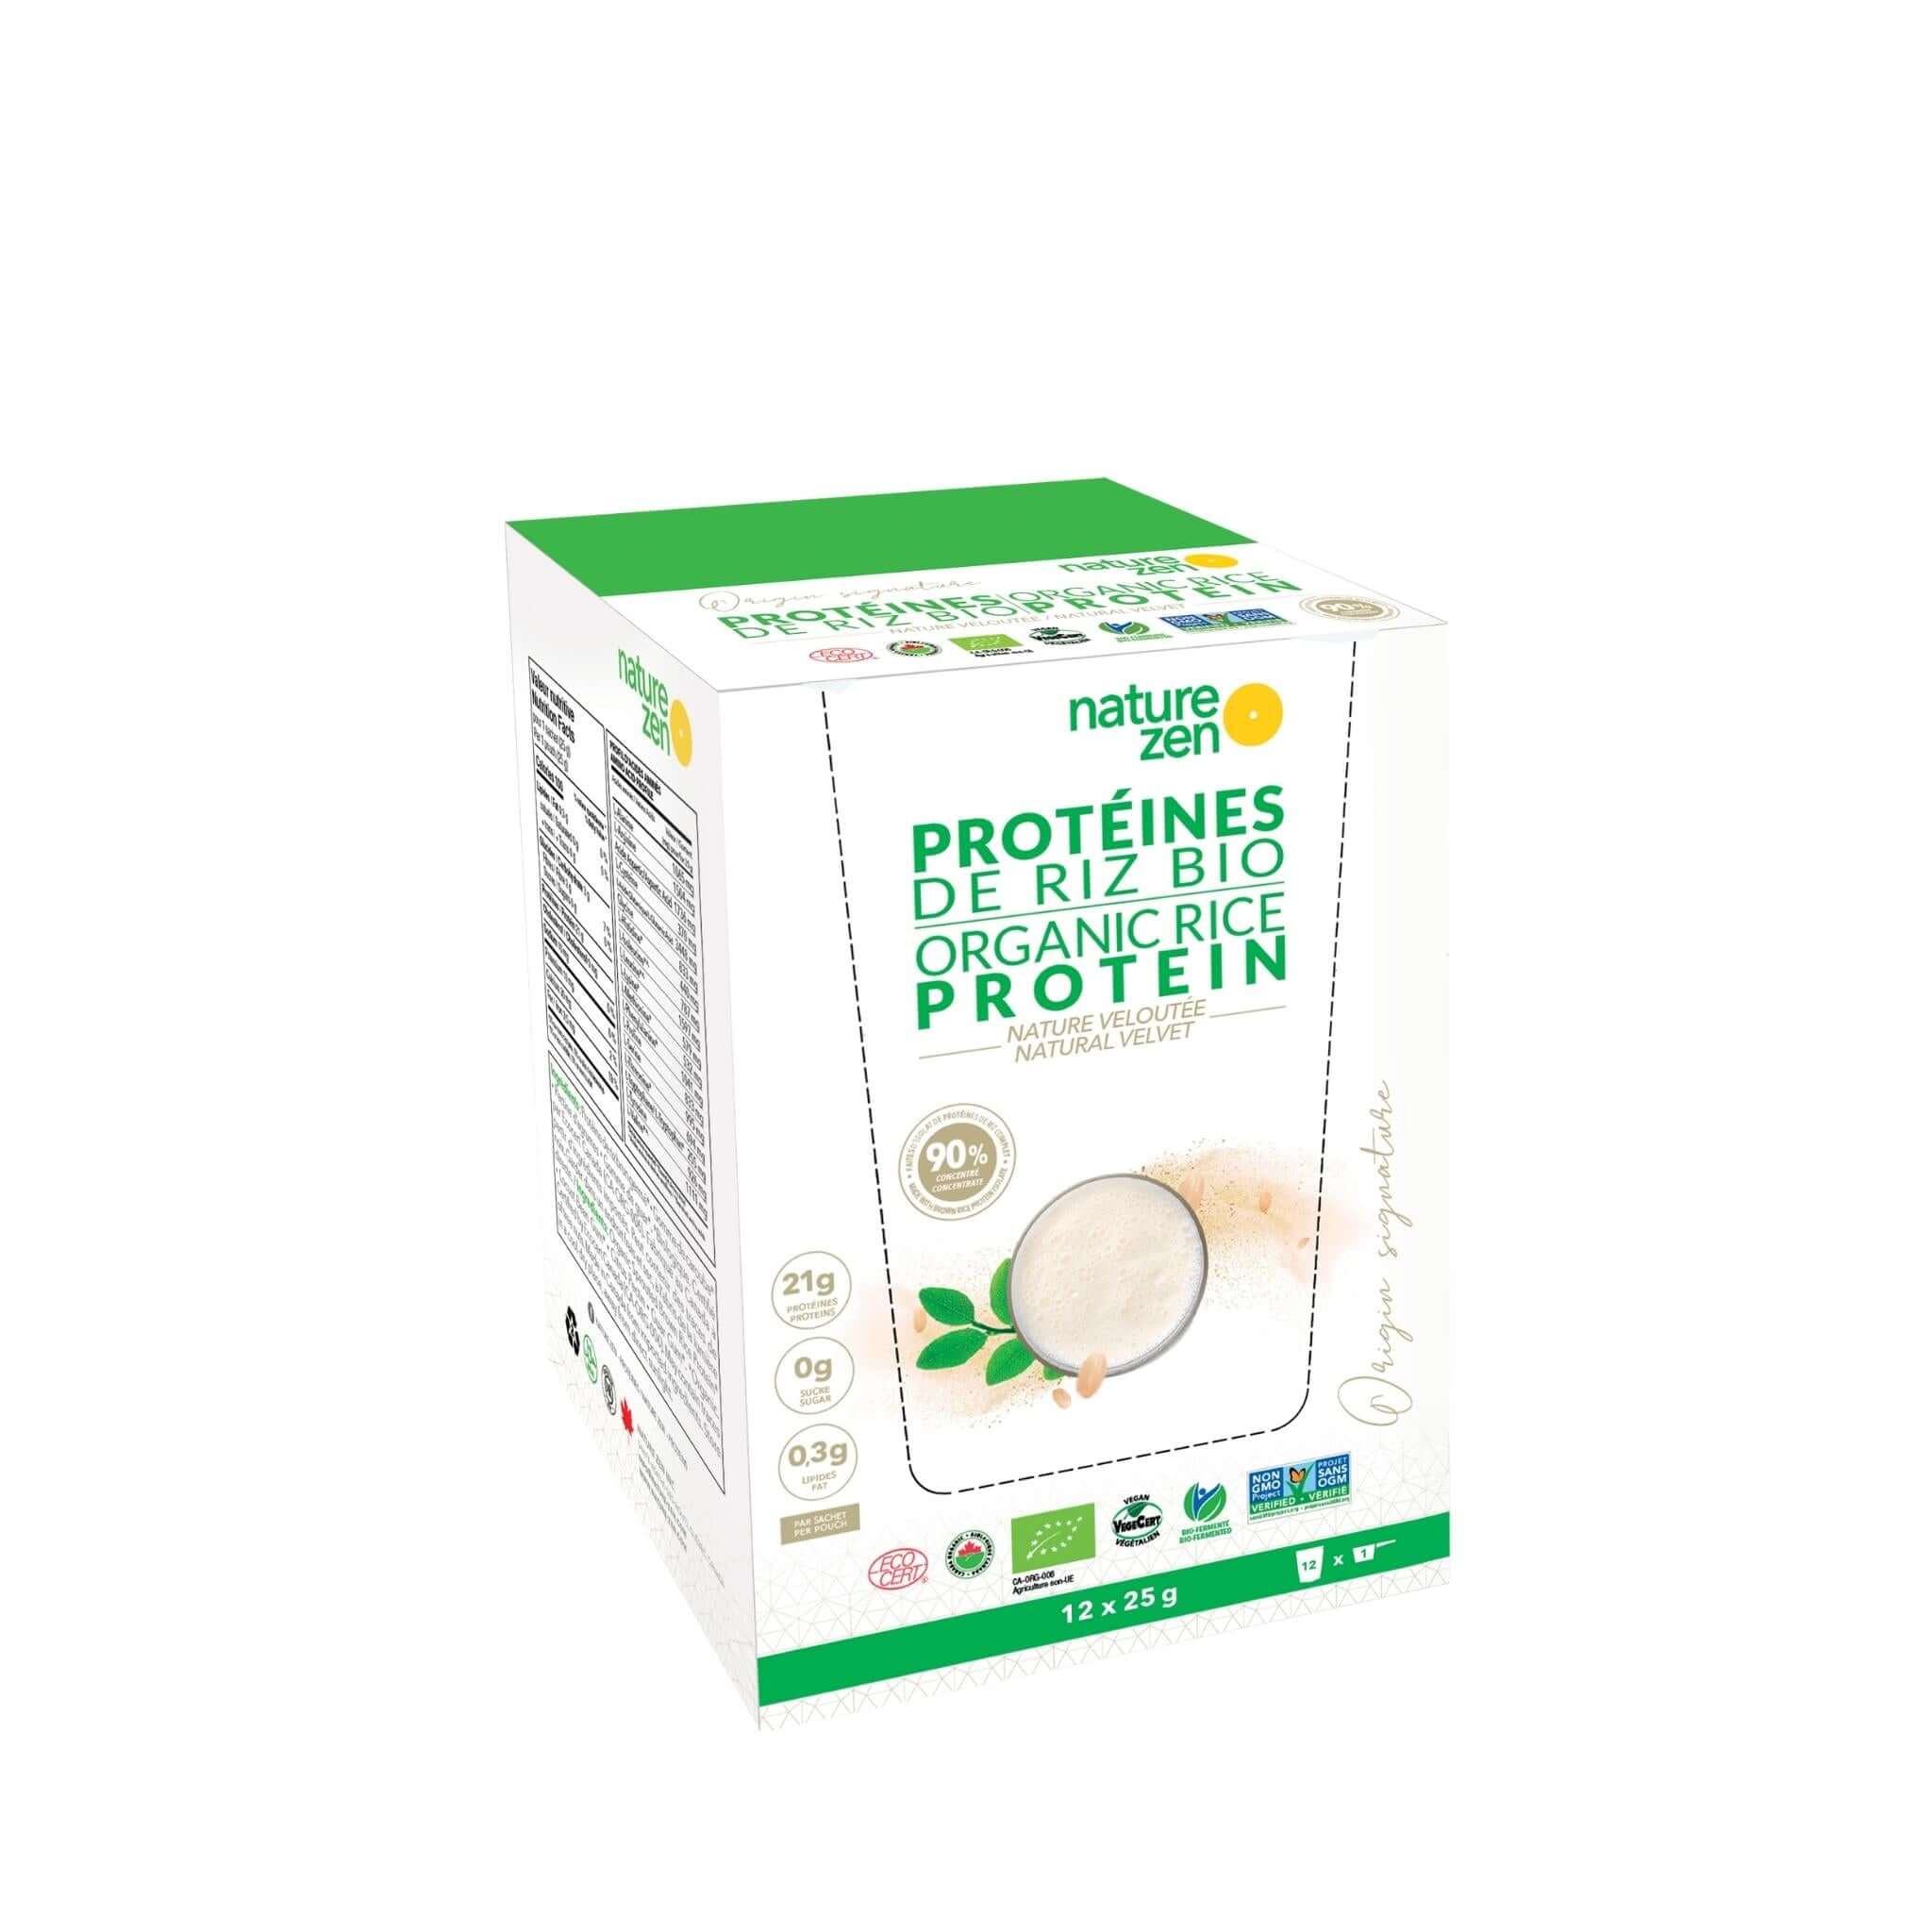 Nature Zen Origin - Organic Rice Protein Powder - Natural Velvet (travel box)